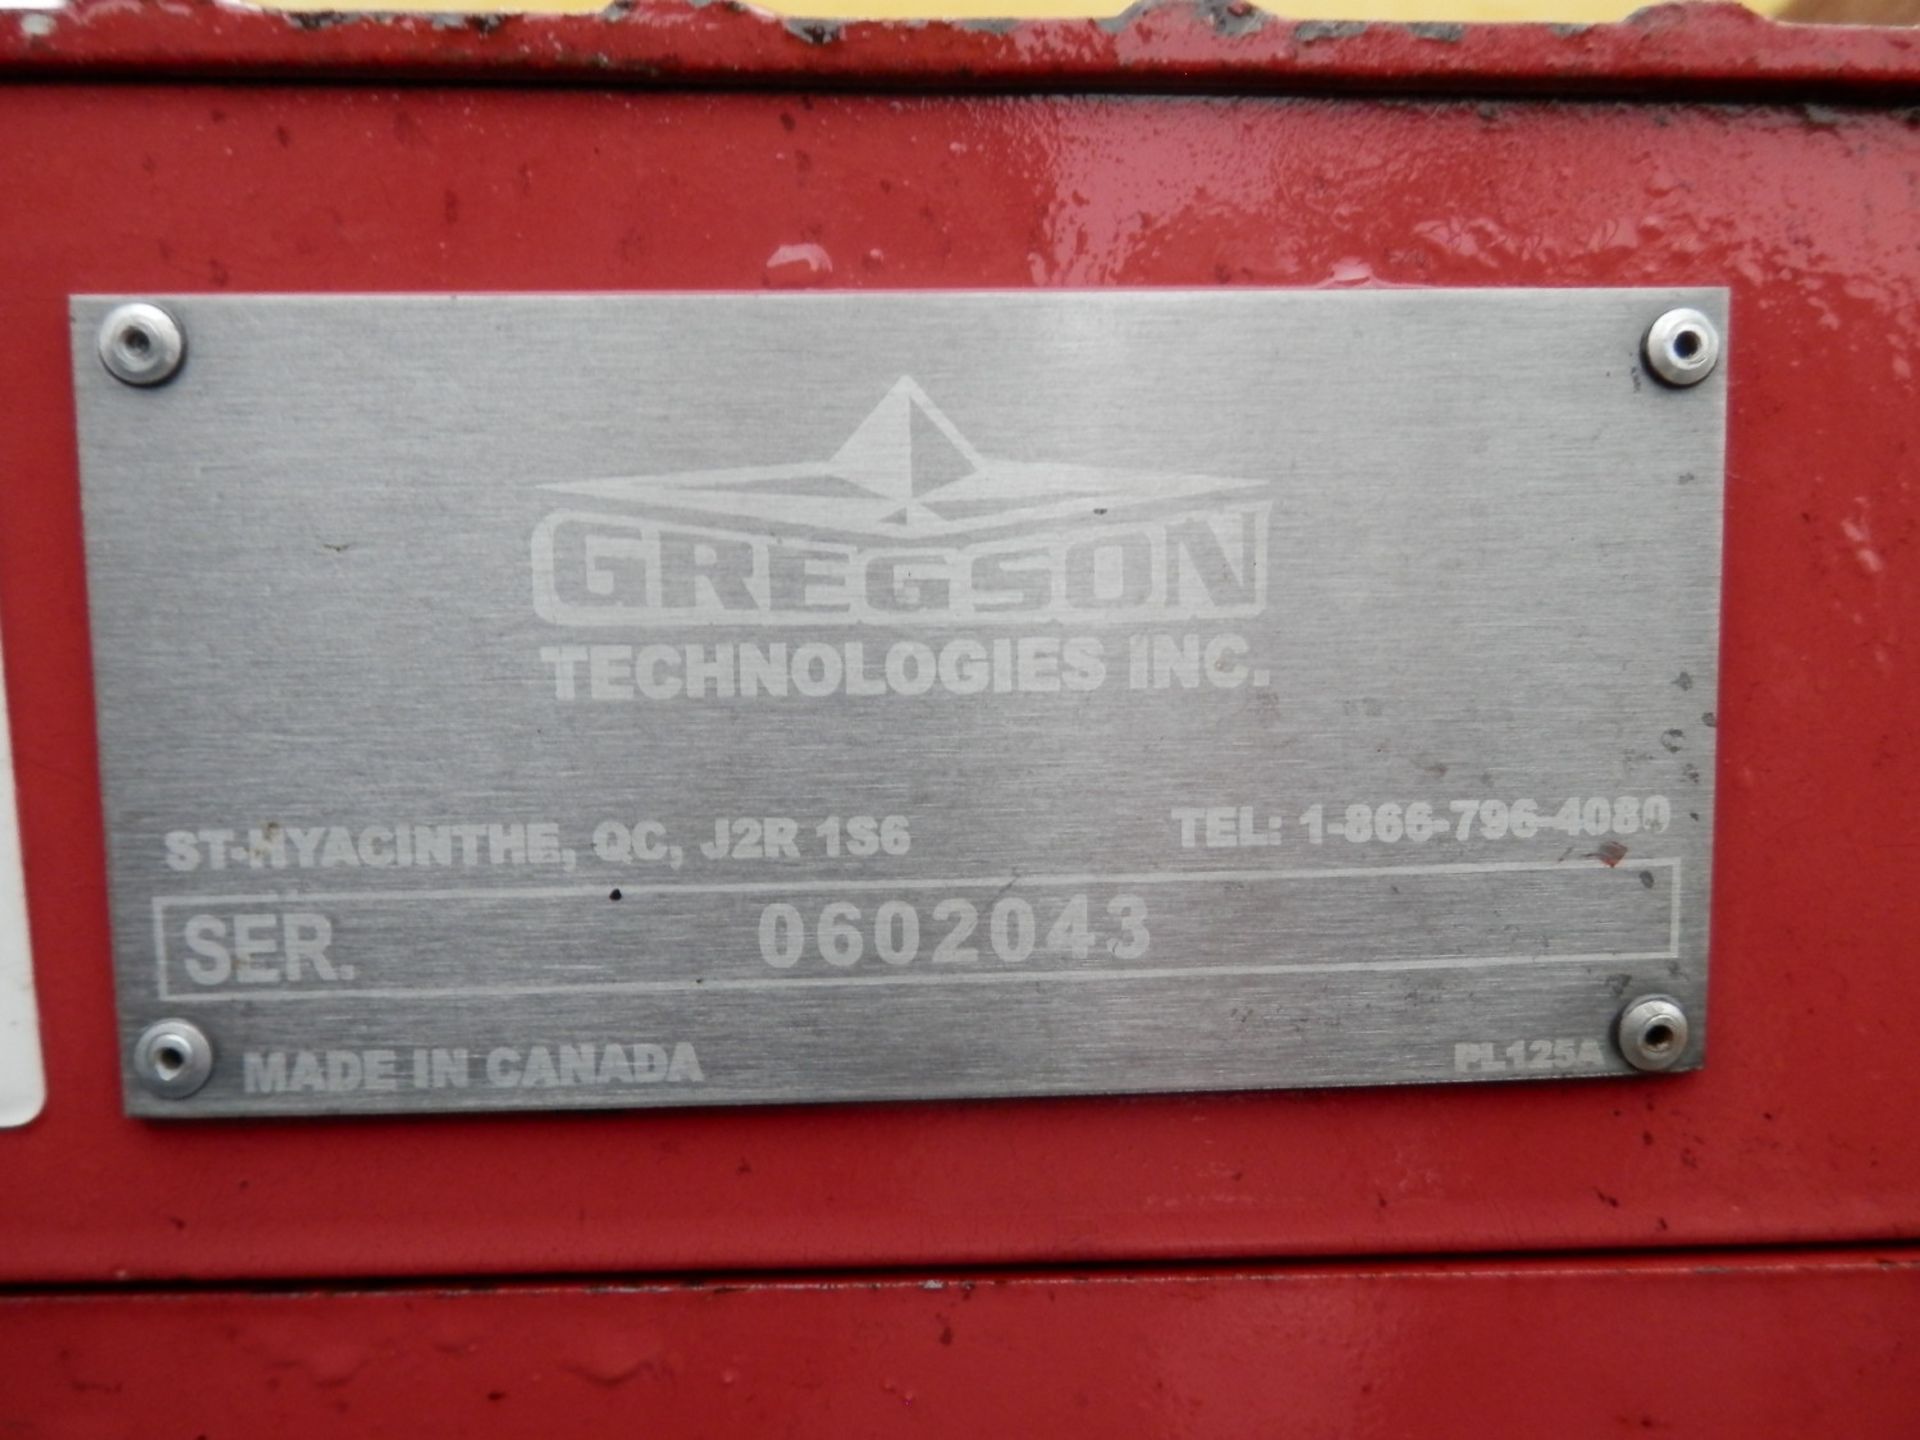 GREGSON 1000 GAL FIELD SPRAYER - Image 11 of 11